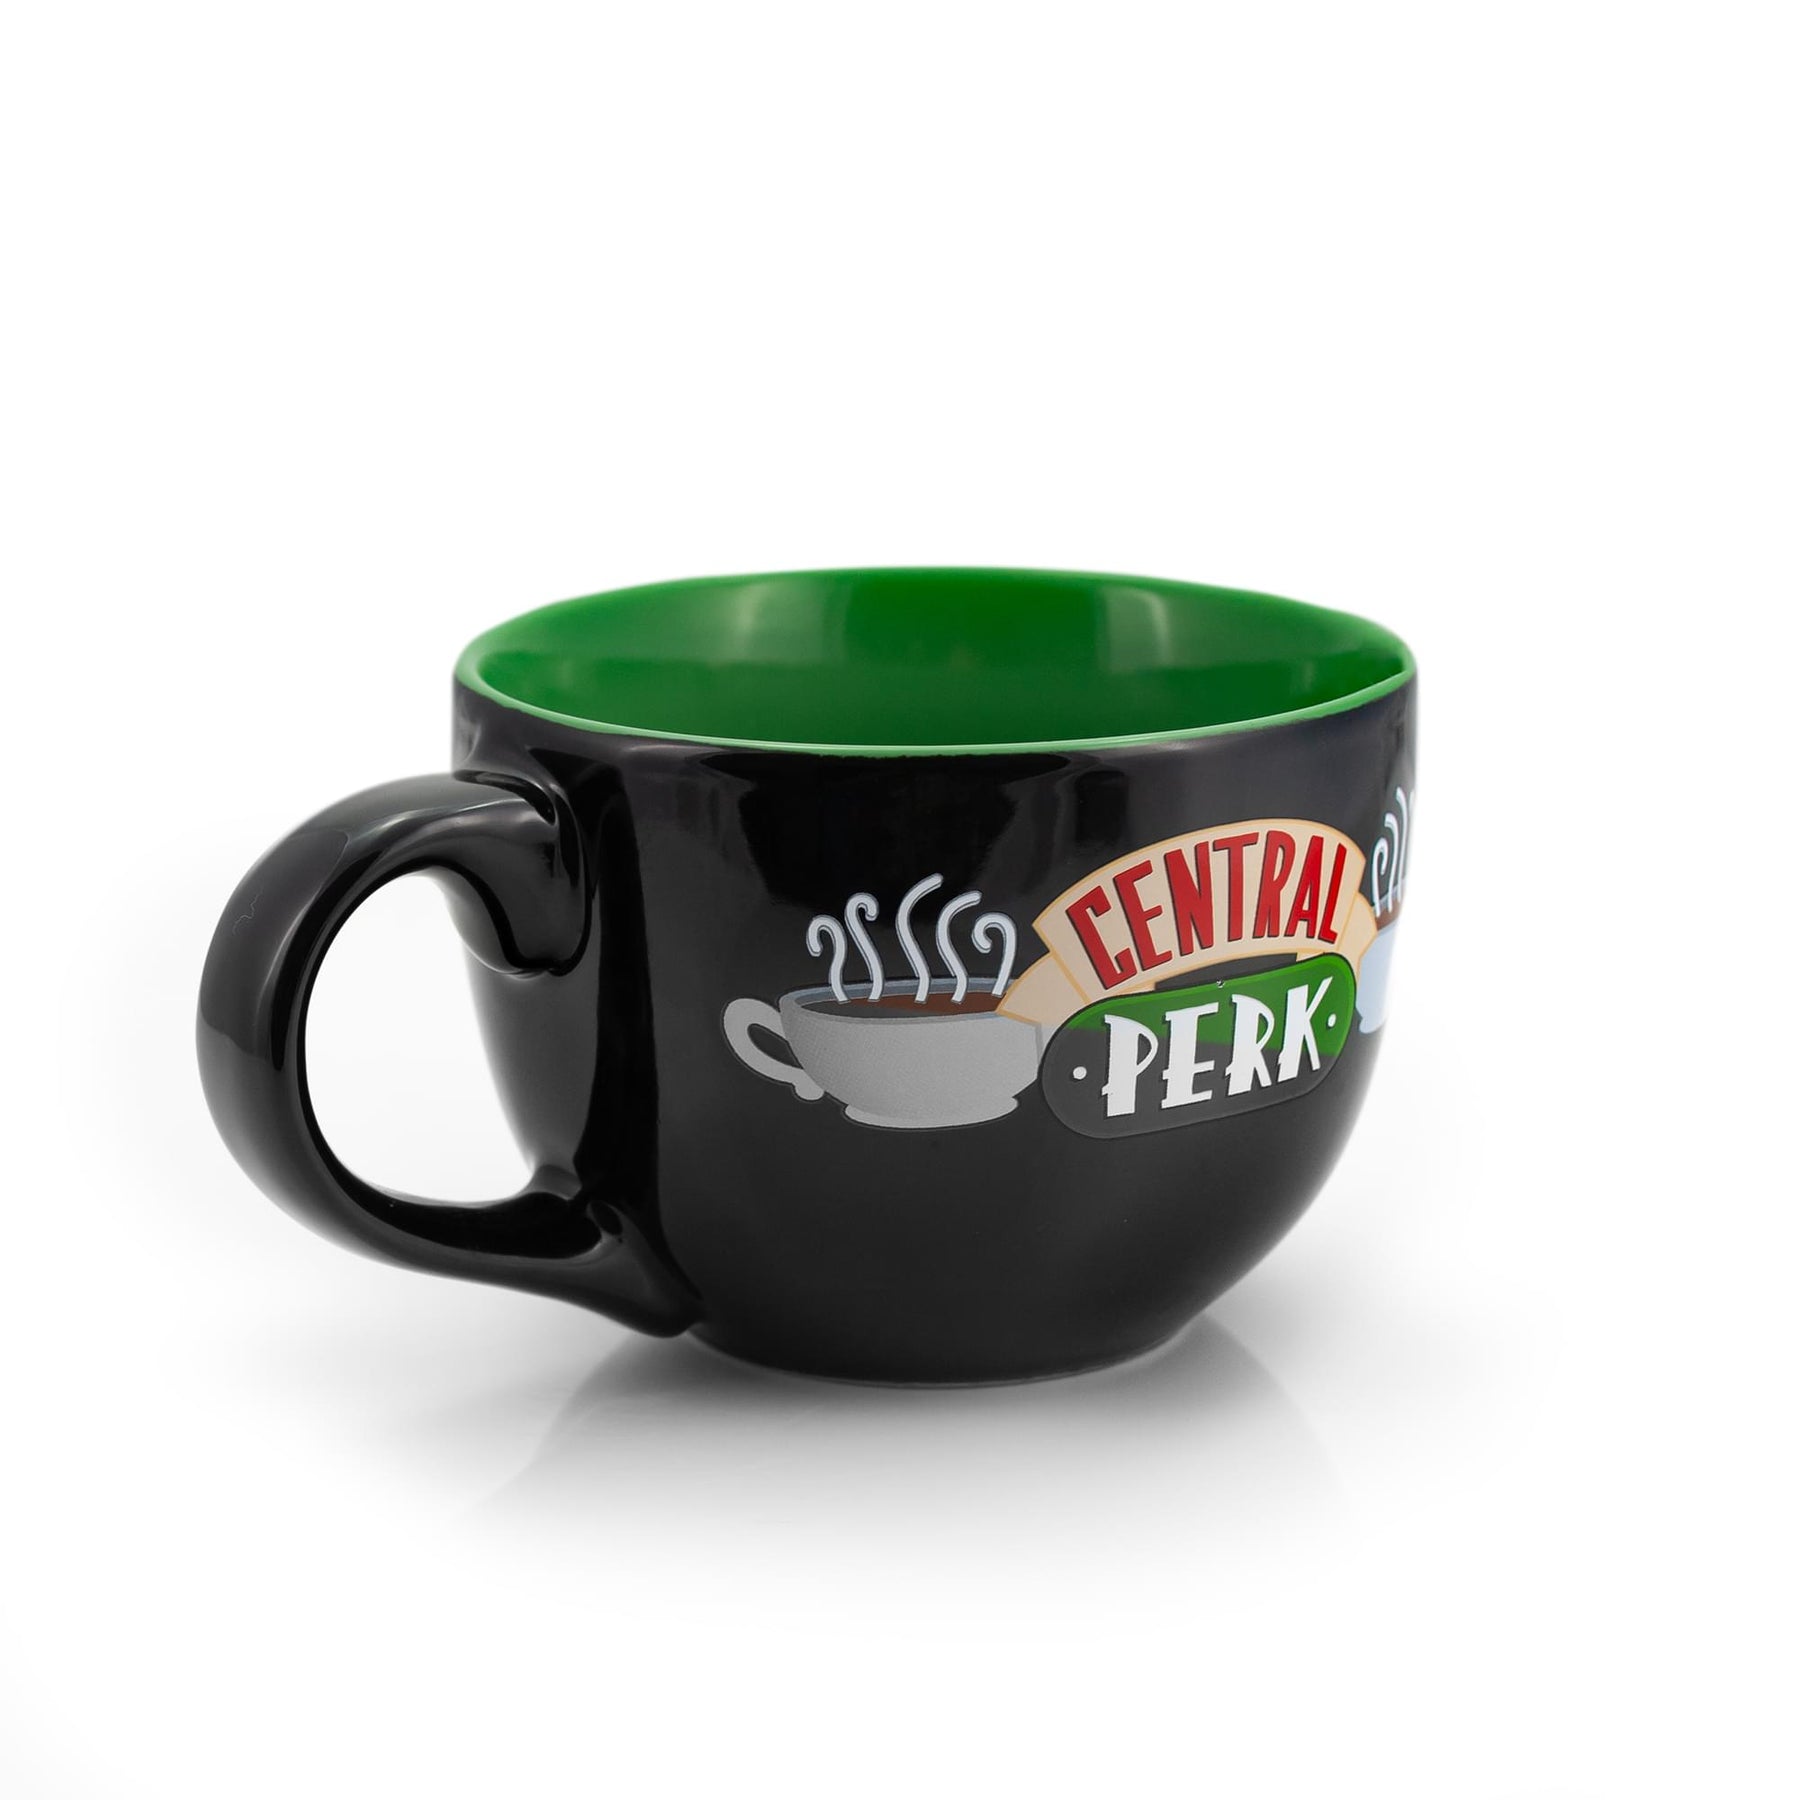 Friends Central Perk Ceramic Mug | Large Mug For Soups & More | Holds 24 Ounces